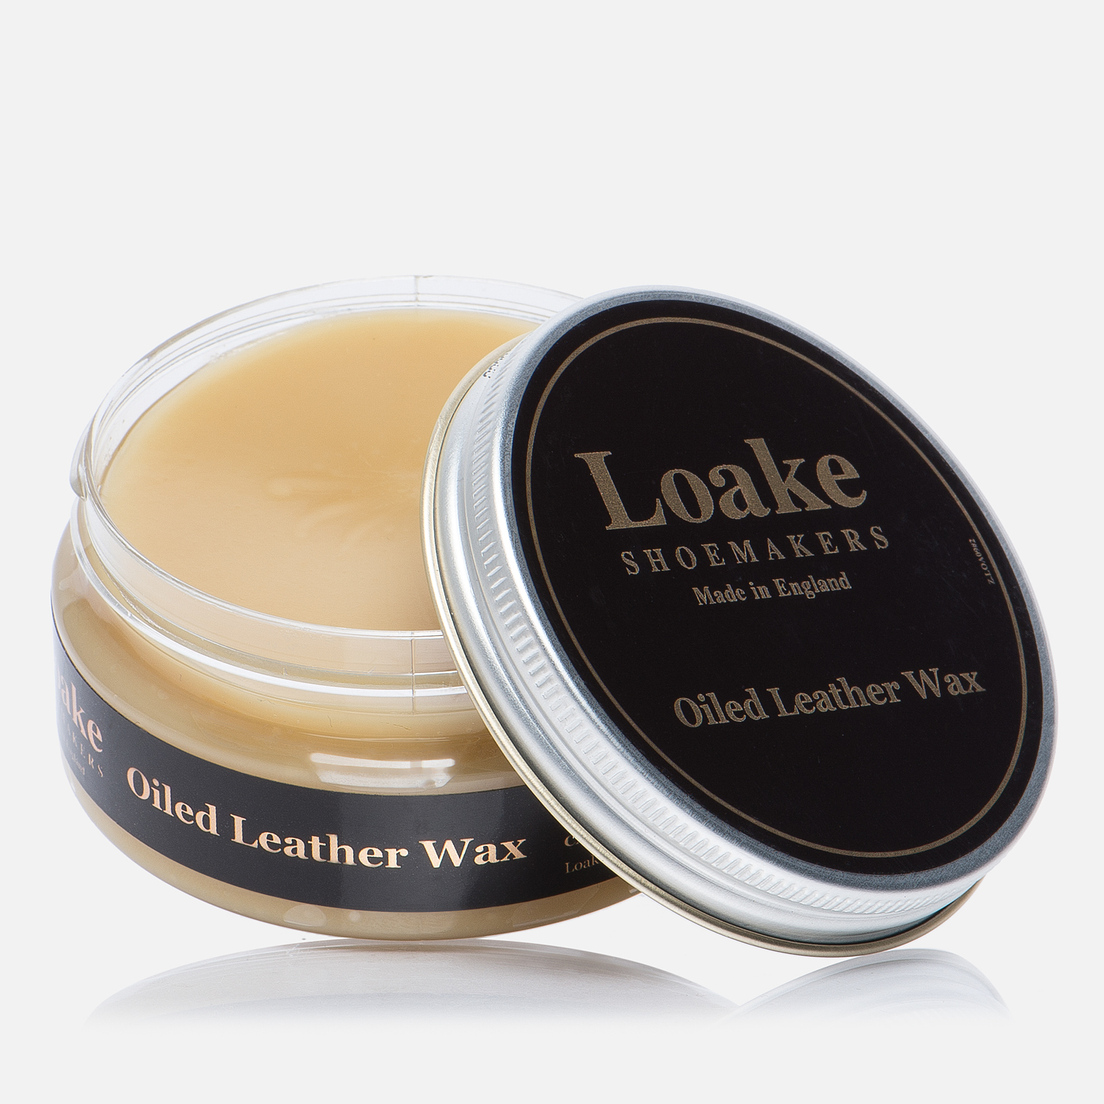 Loake Крем для обуви Oiled Leather Wax